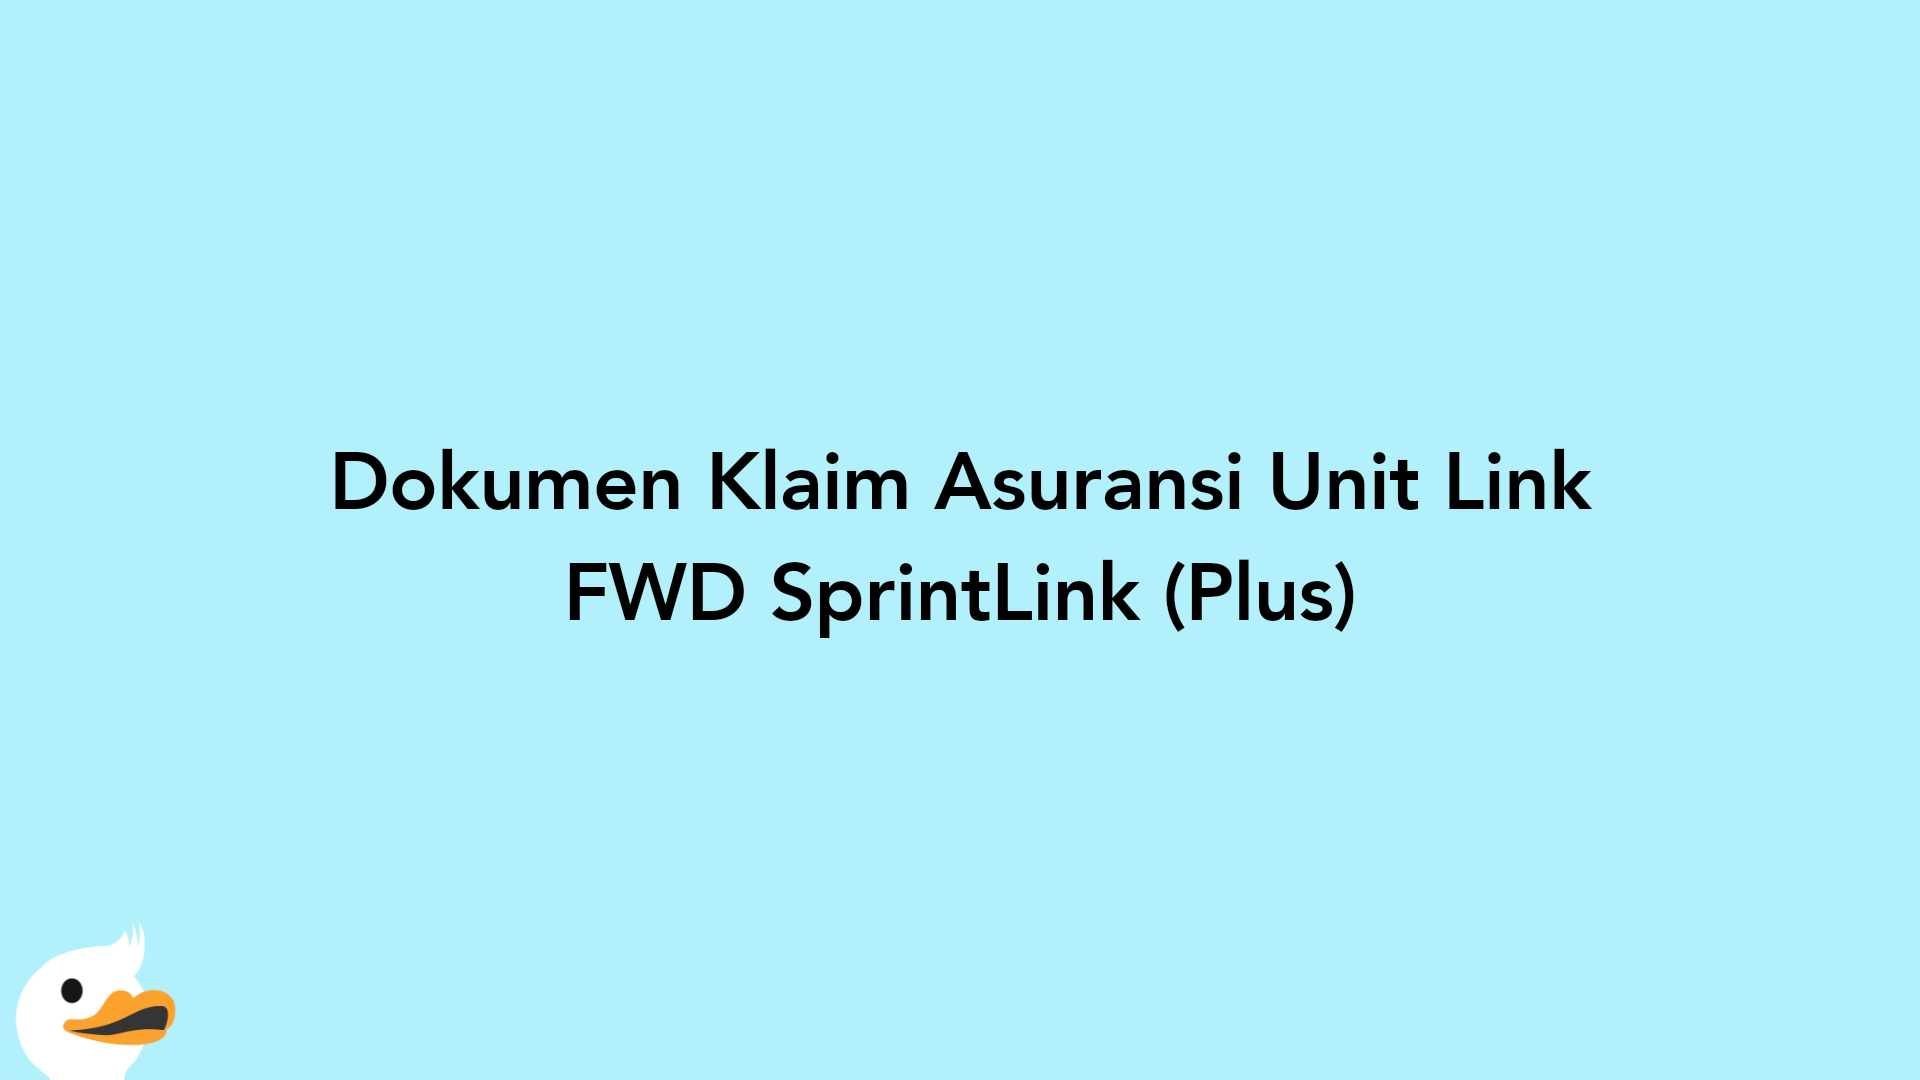 Dokumen Klaim Asuransi Unit Link FWD SprintLink (Plus)